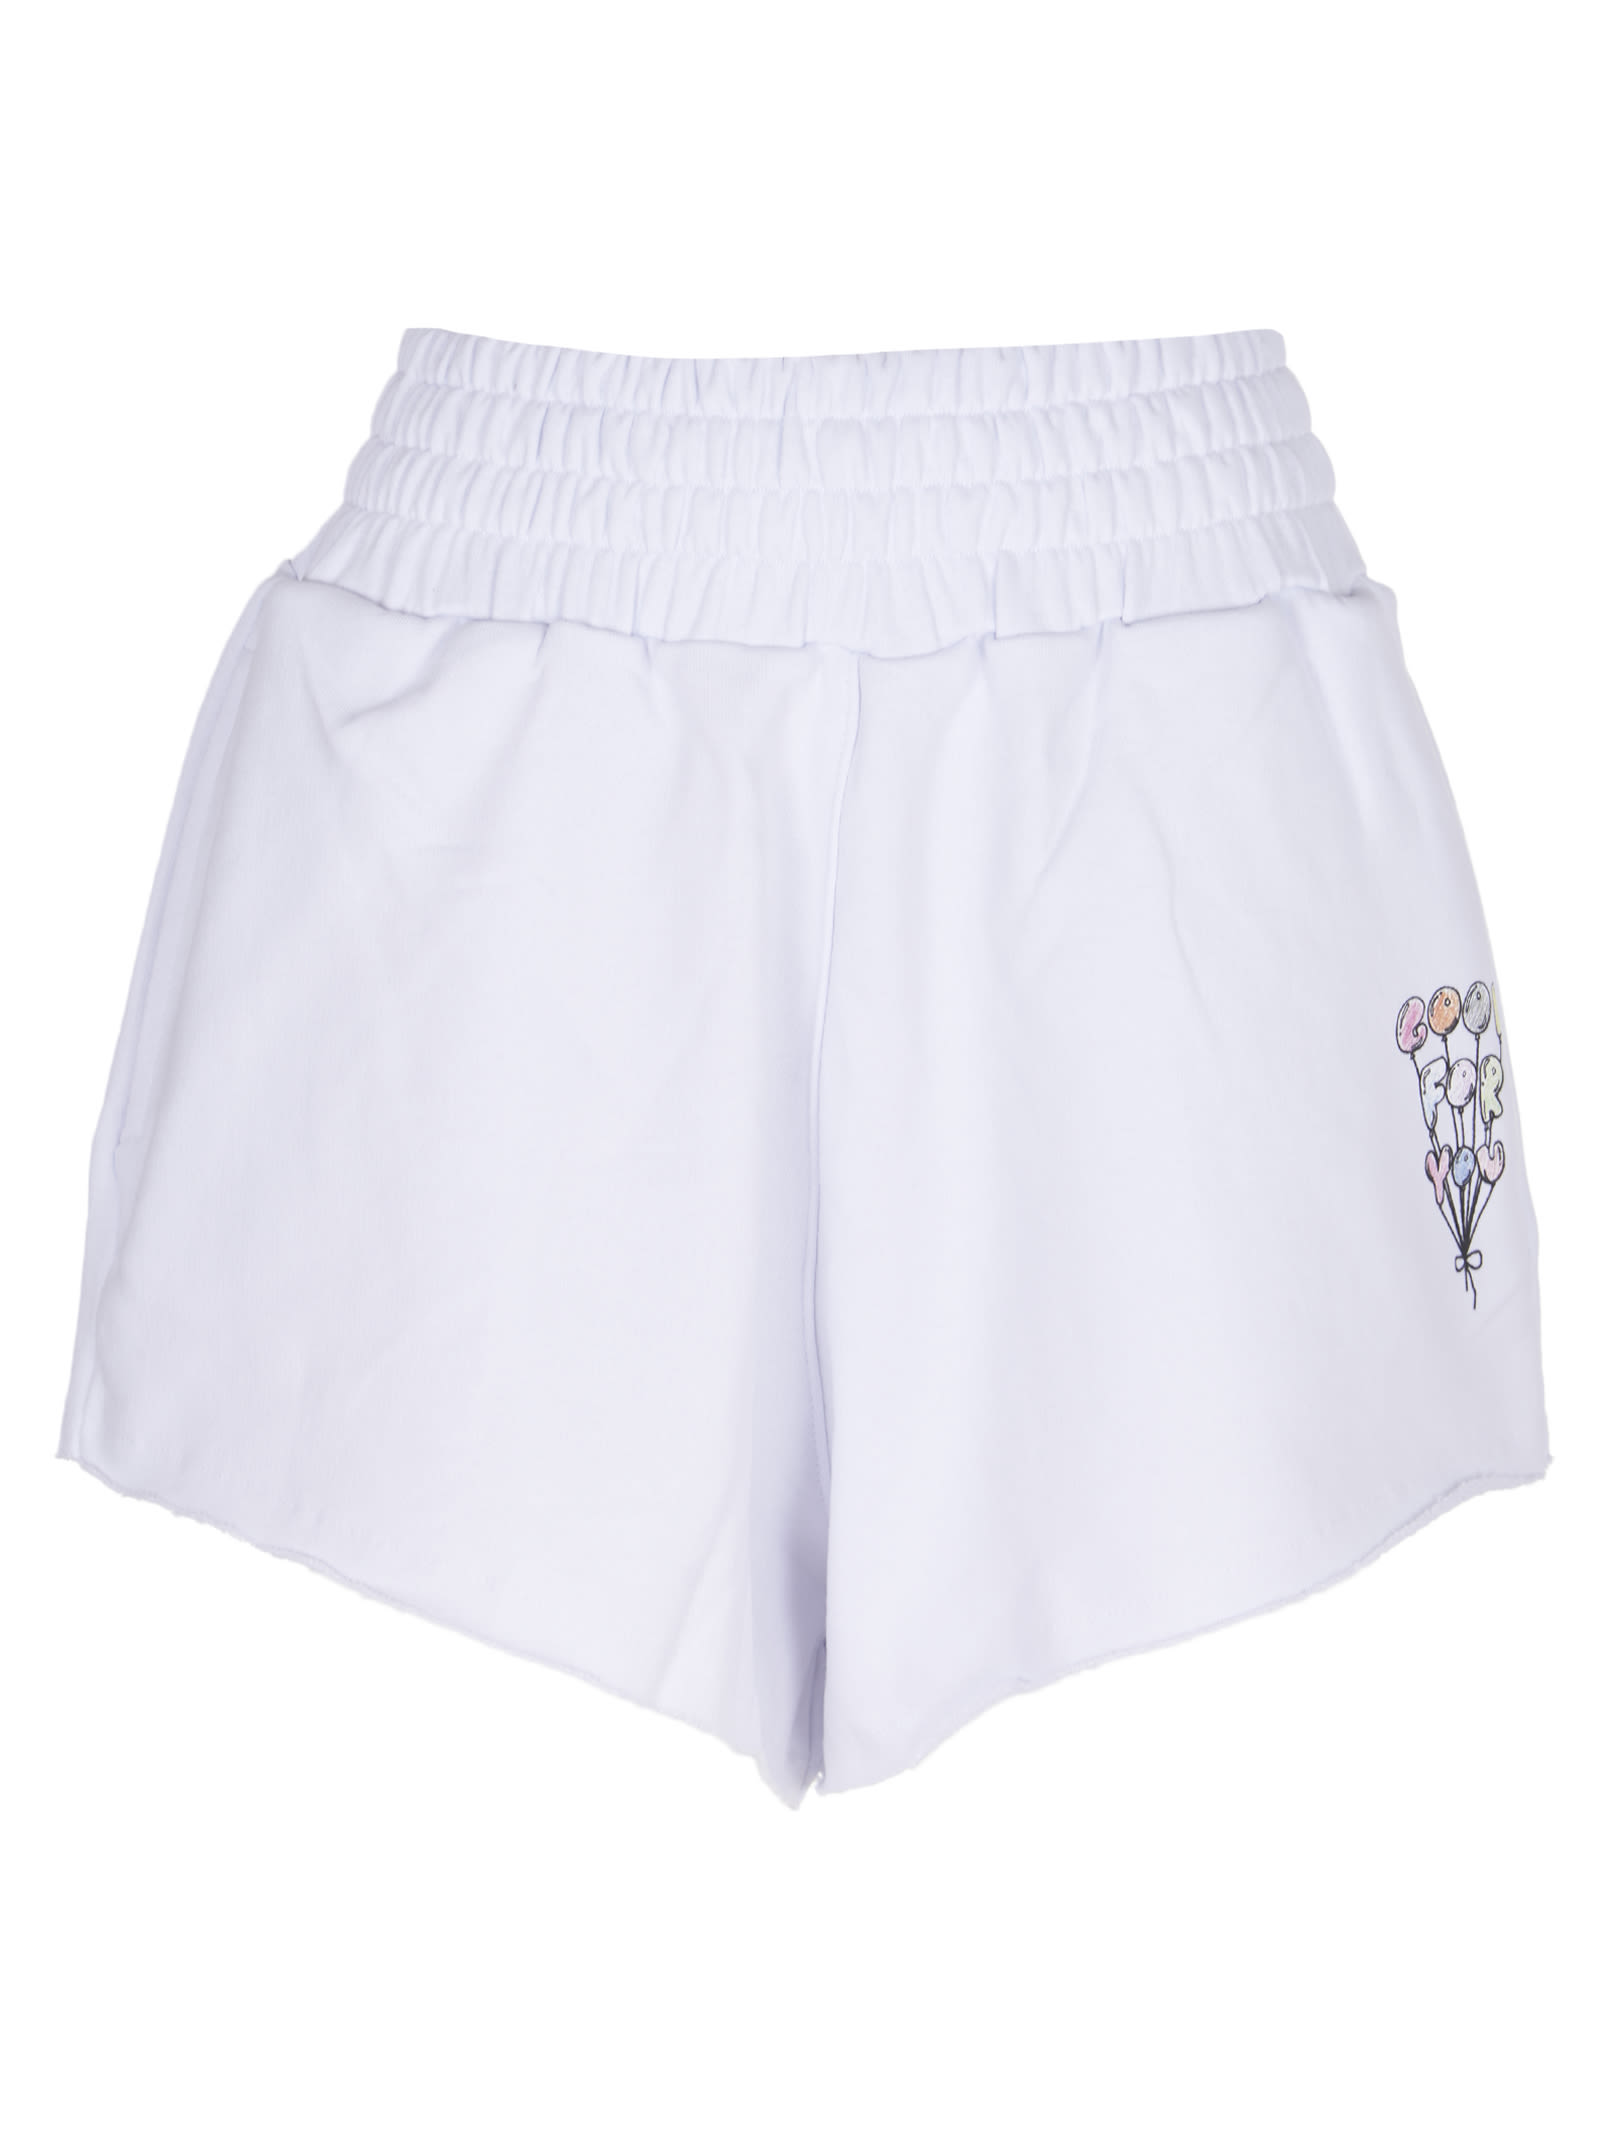 IRENEISGOOD White Shorts